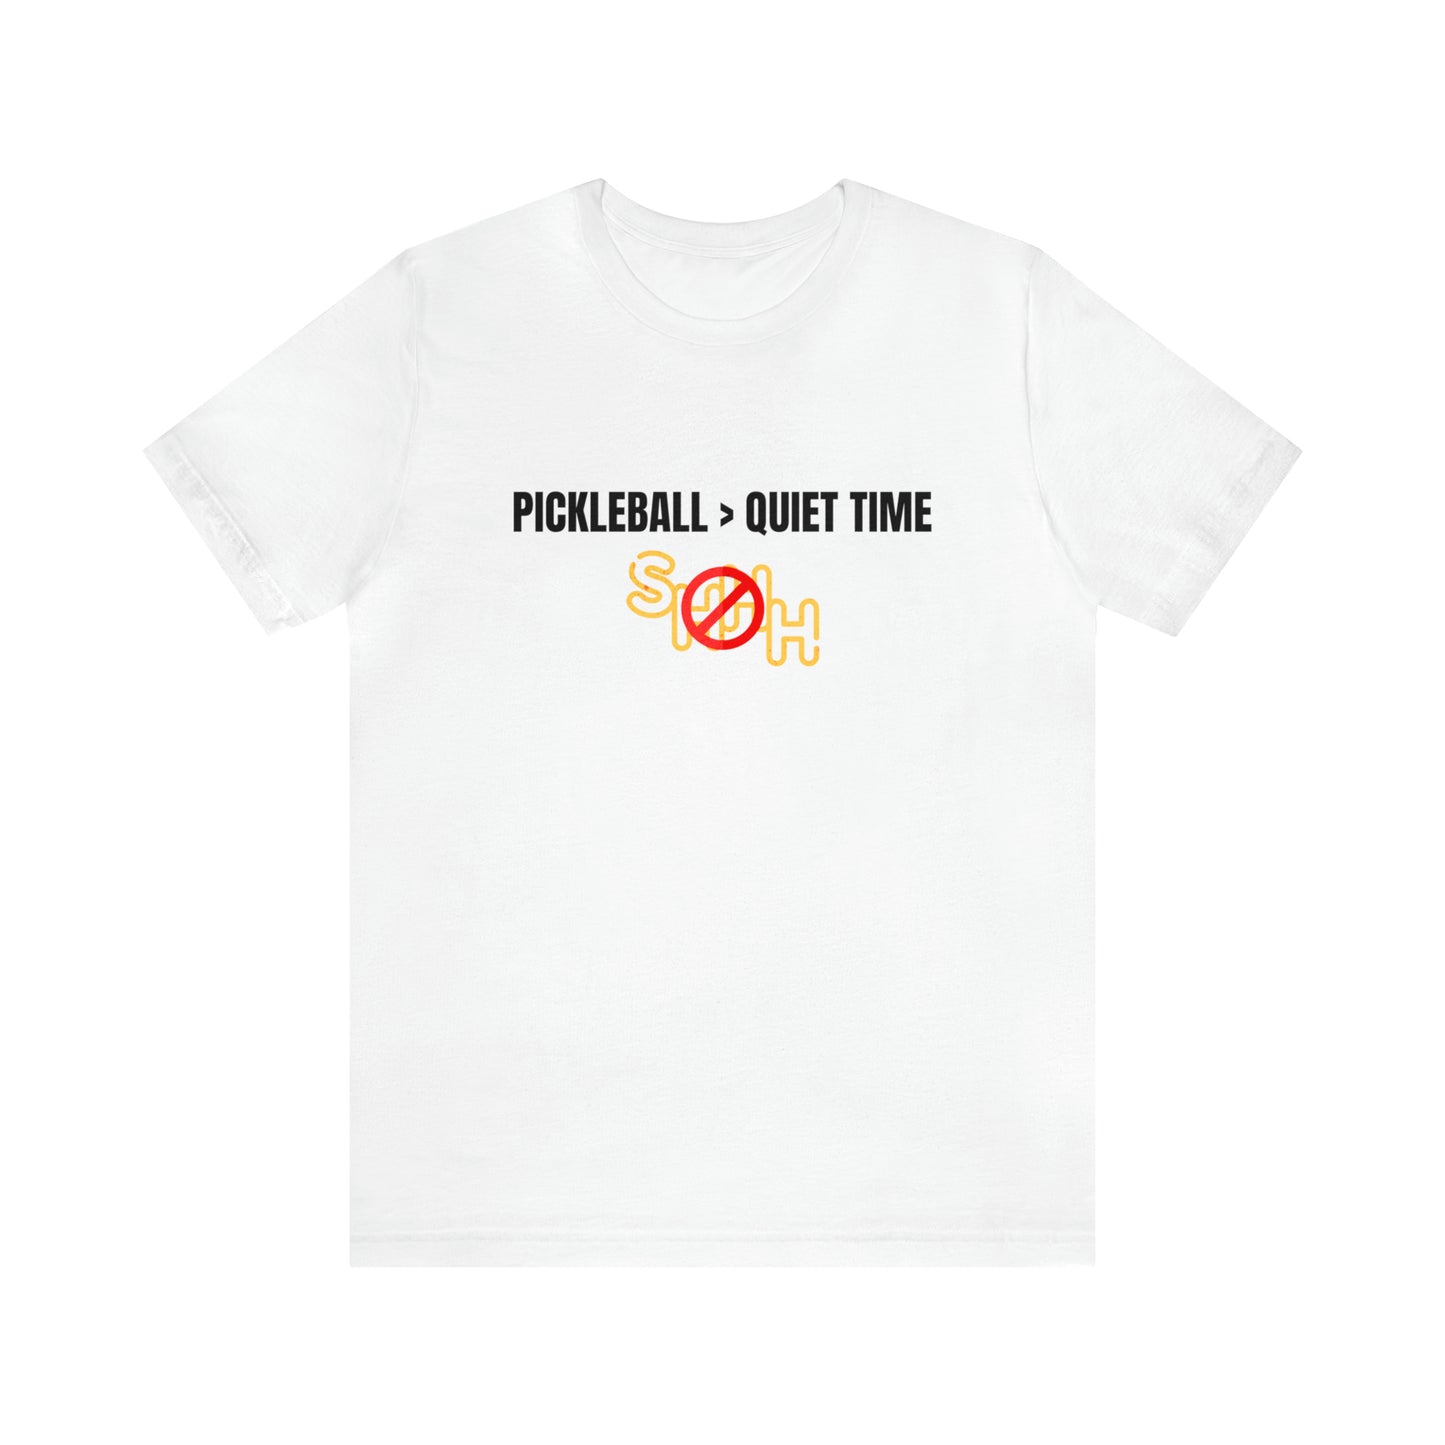 Pickleball > Quiet Time T-Shirt